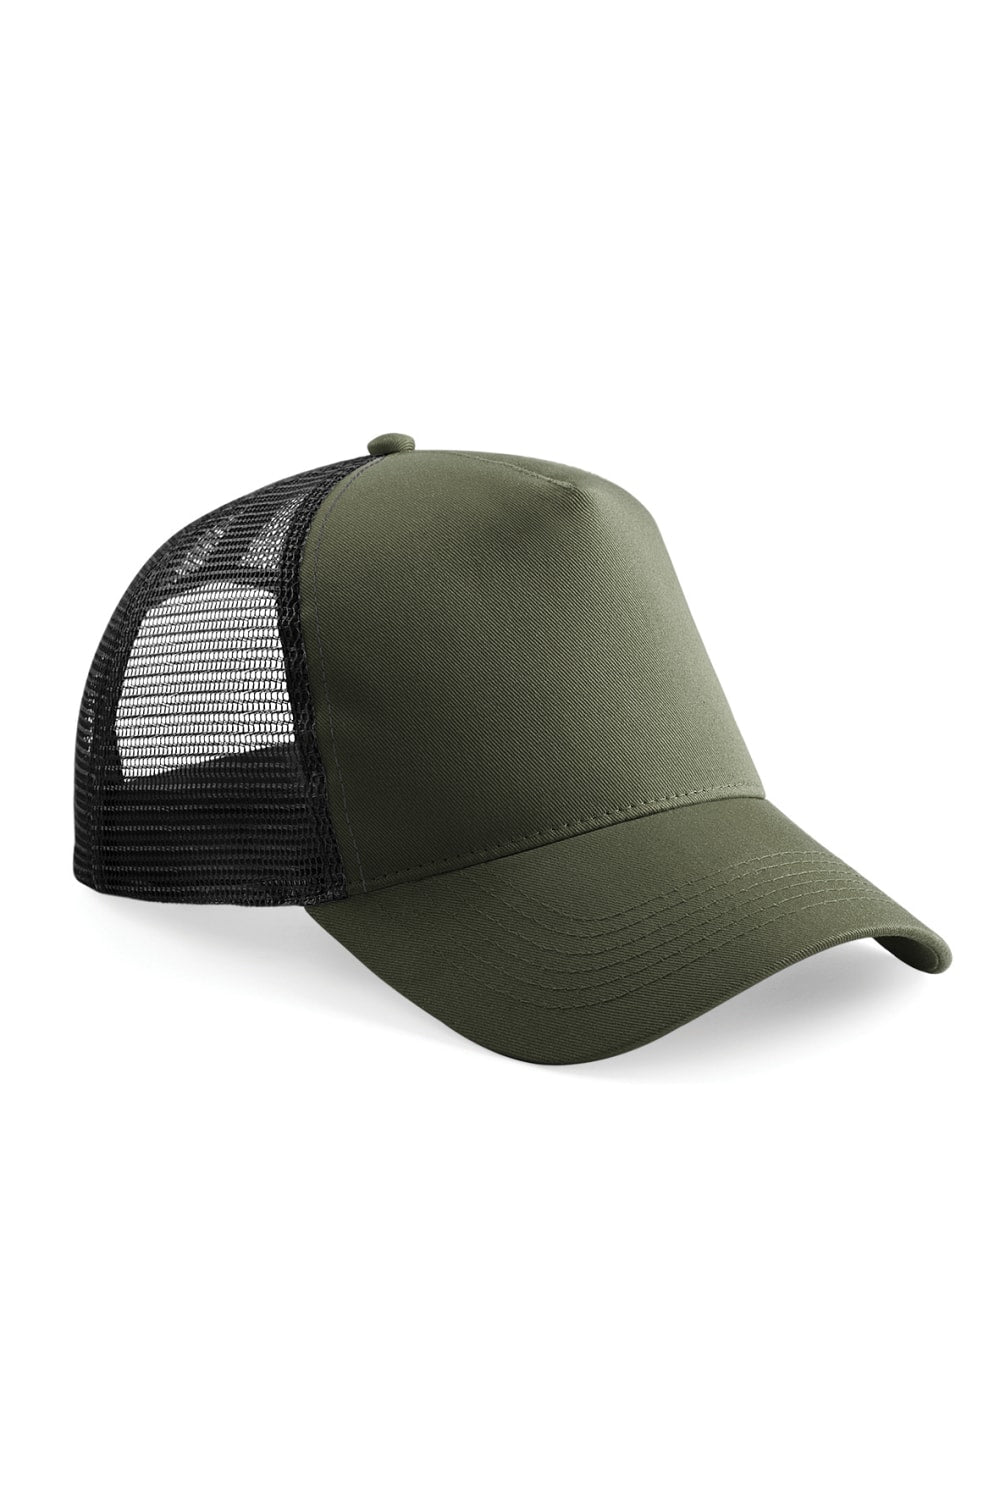 Mens Half Mesh Trucker Cap/Headwear Pack Of 2- Olive Green/Black